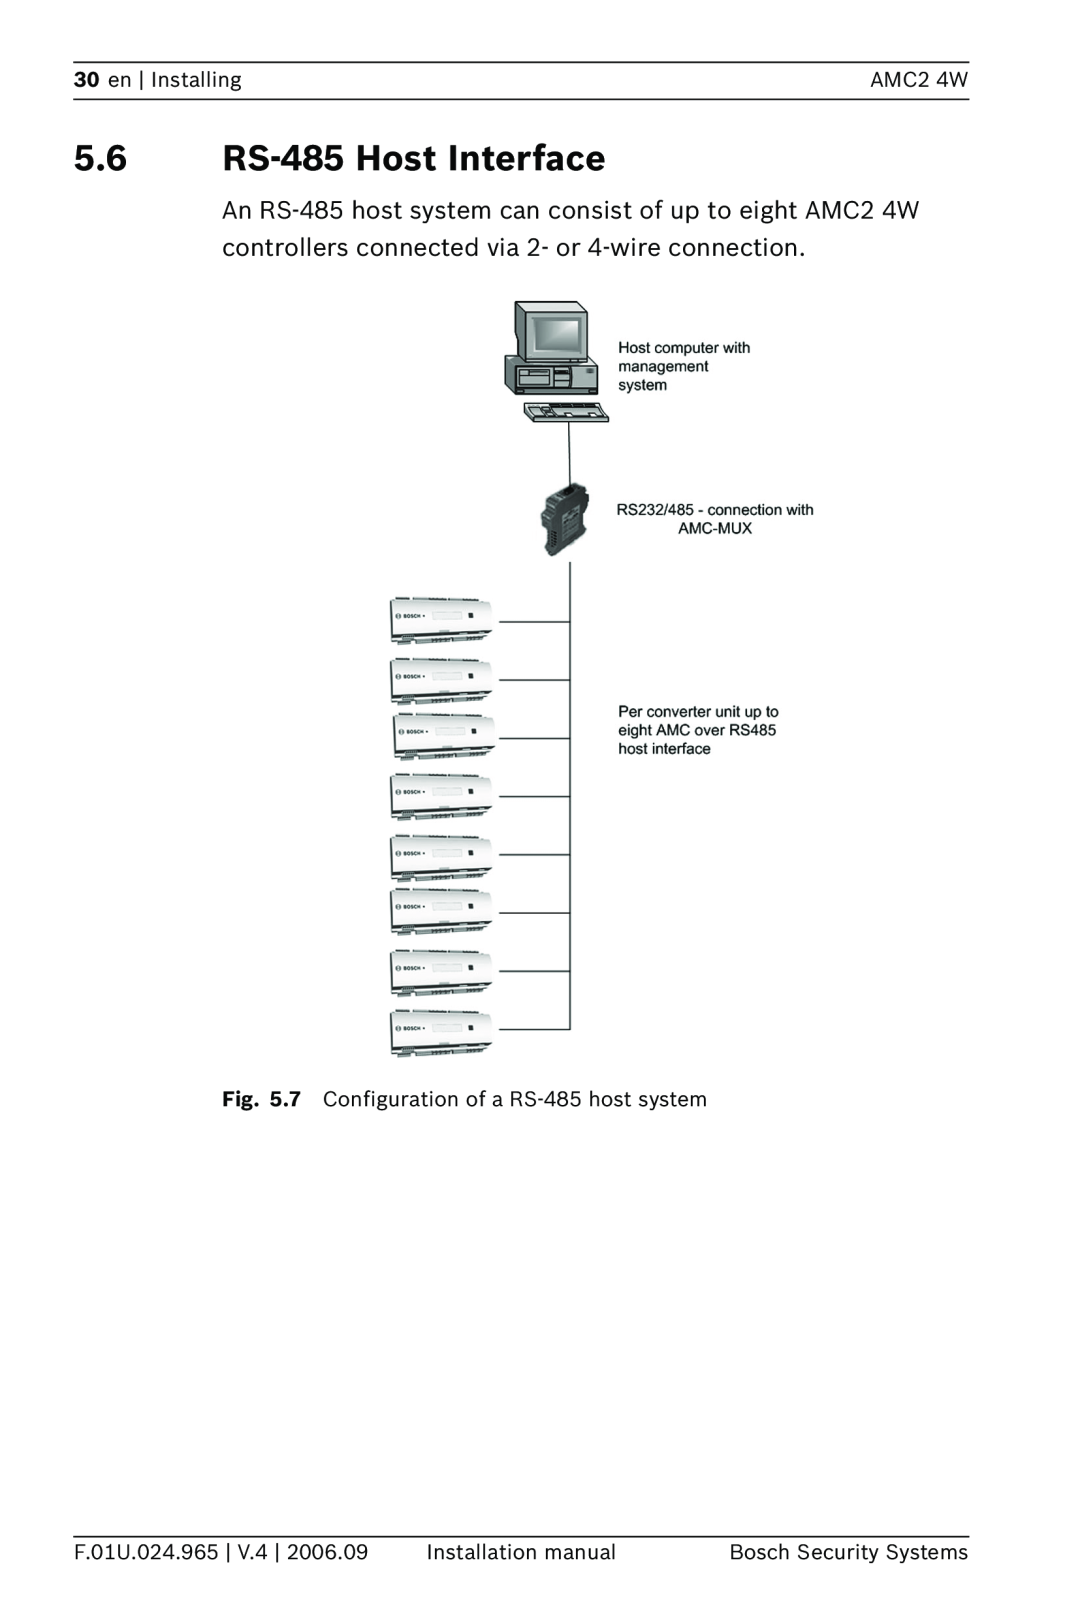 Bosch Appliances APC-AMC2-4WUS 5.6RS-485Host Interface, en Installing, AMC2 4W, 7 Configuration of a RS-485host system 